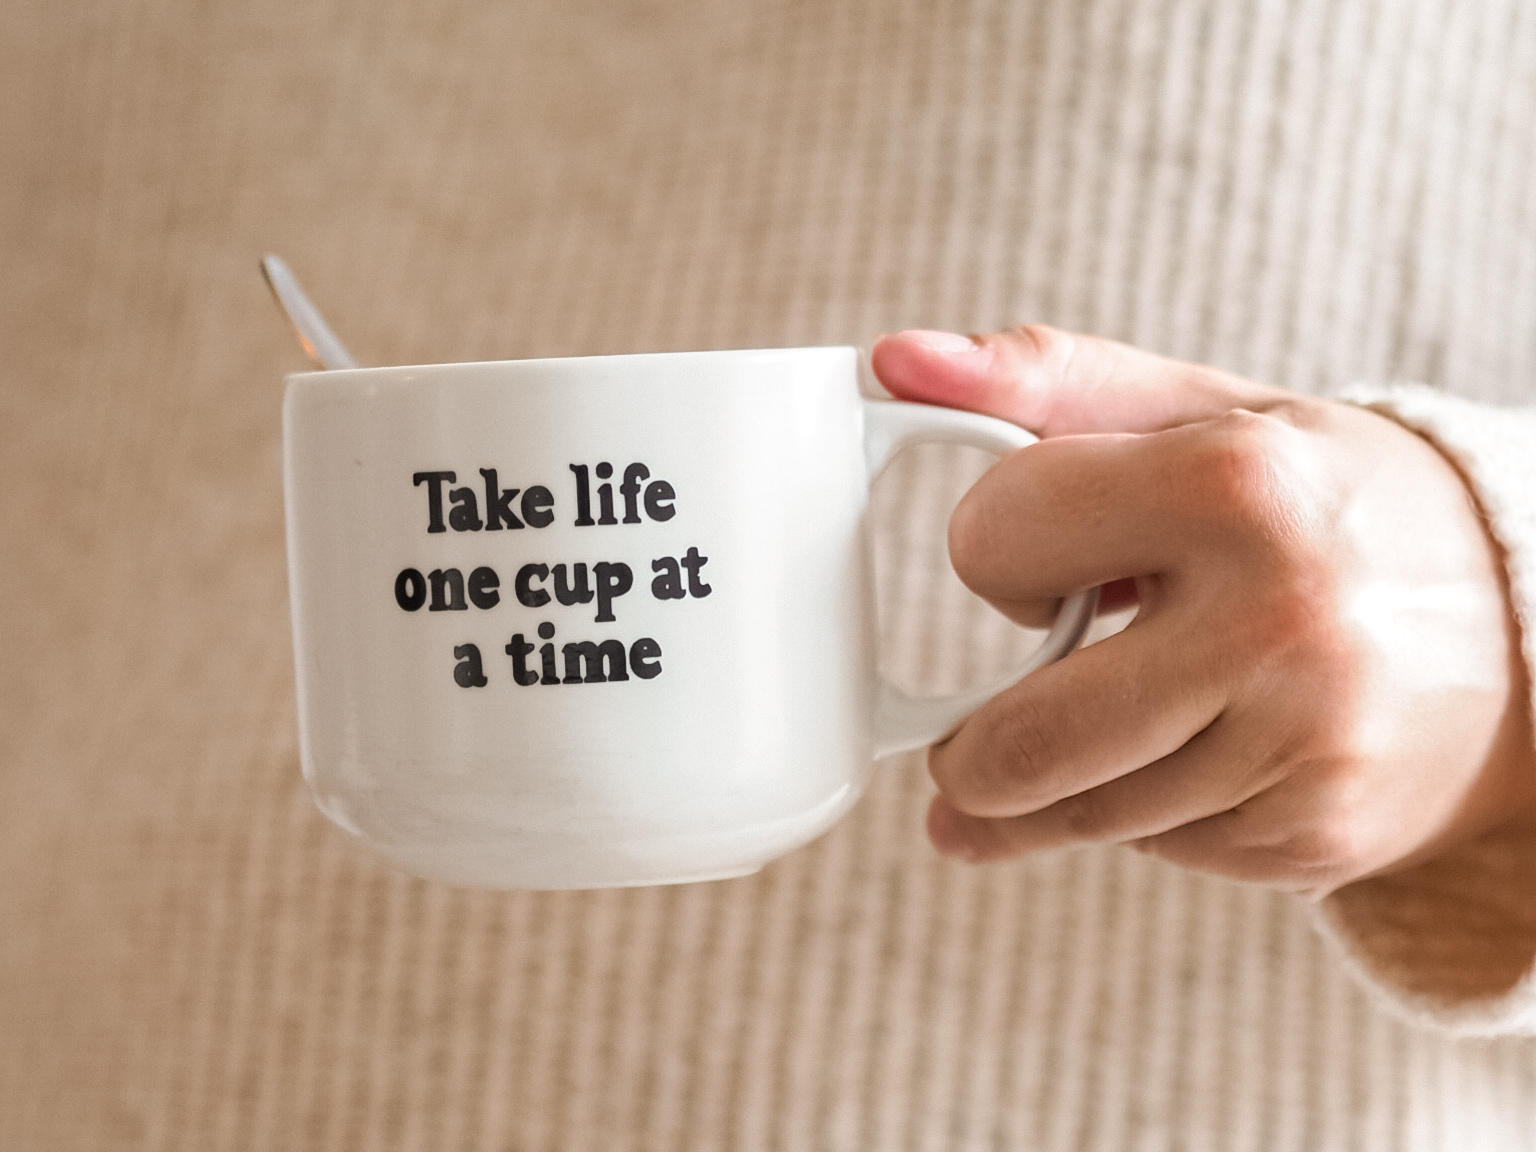 Käsi, joka pitelee kahvikuppia, jossa lukee: Take life one cup at a time.